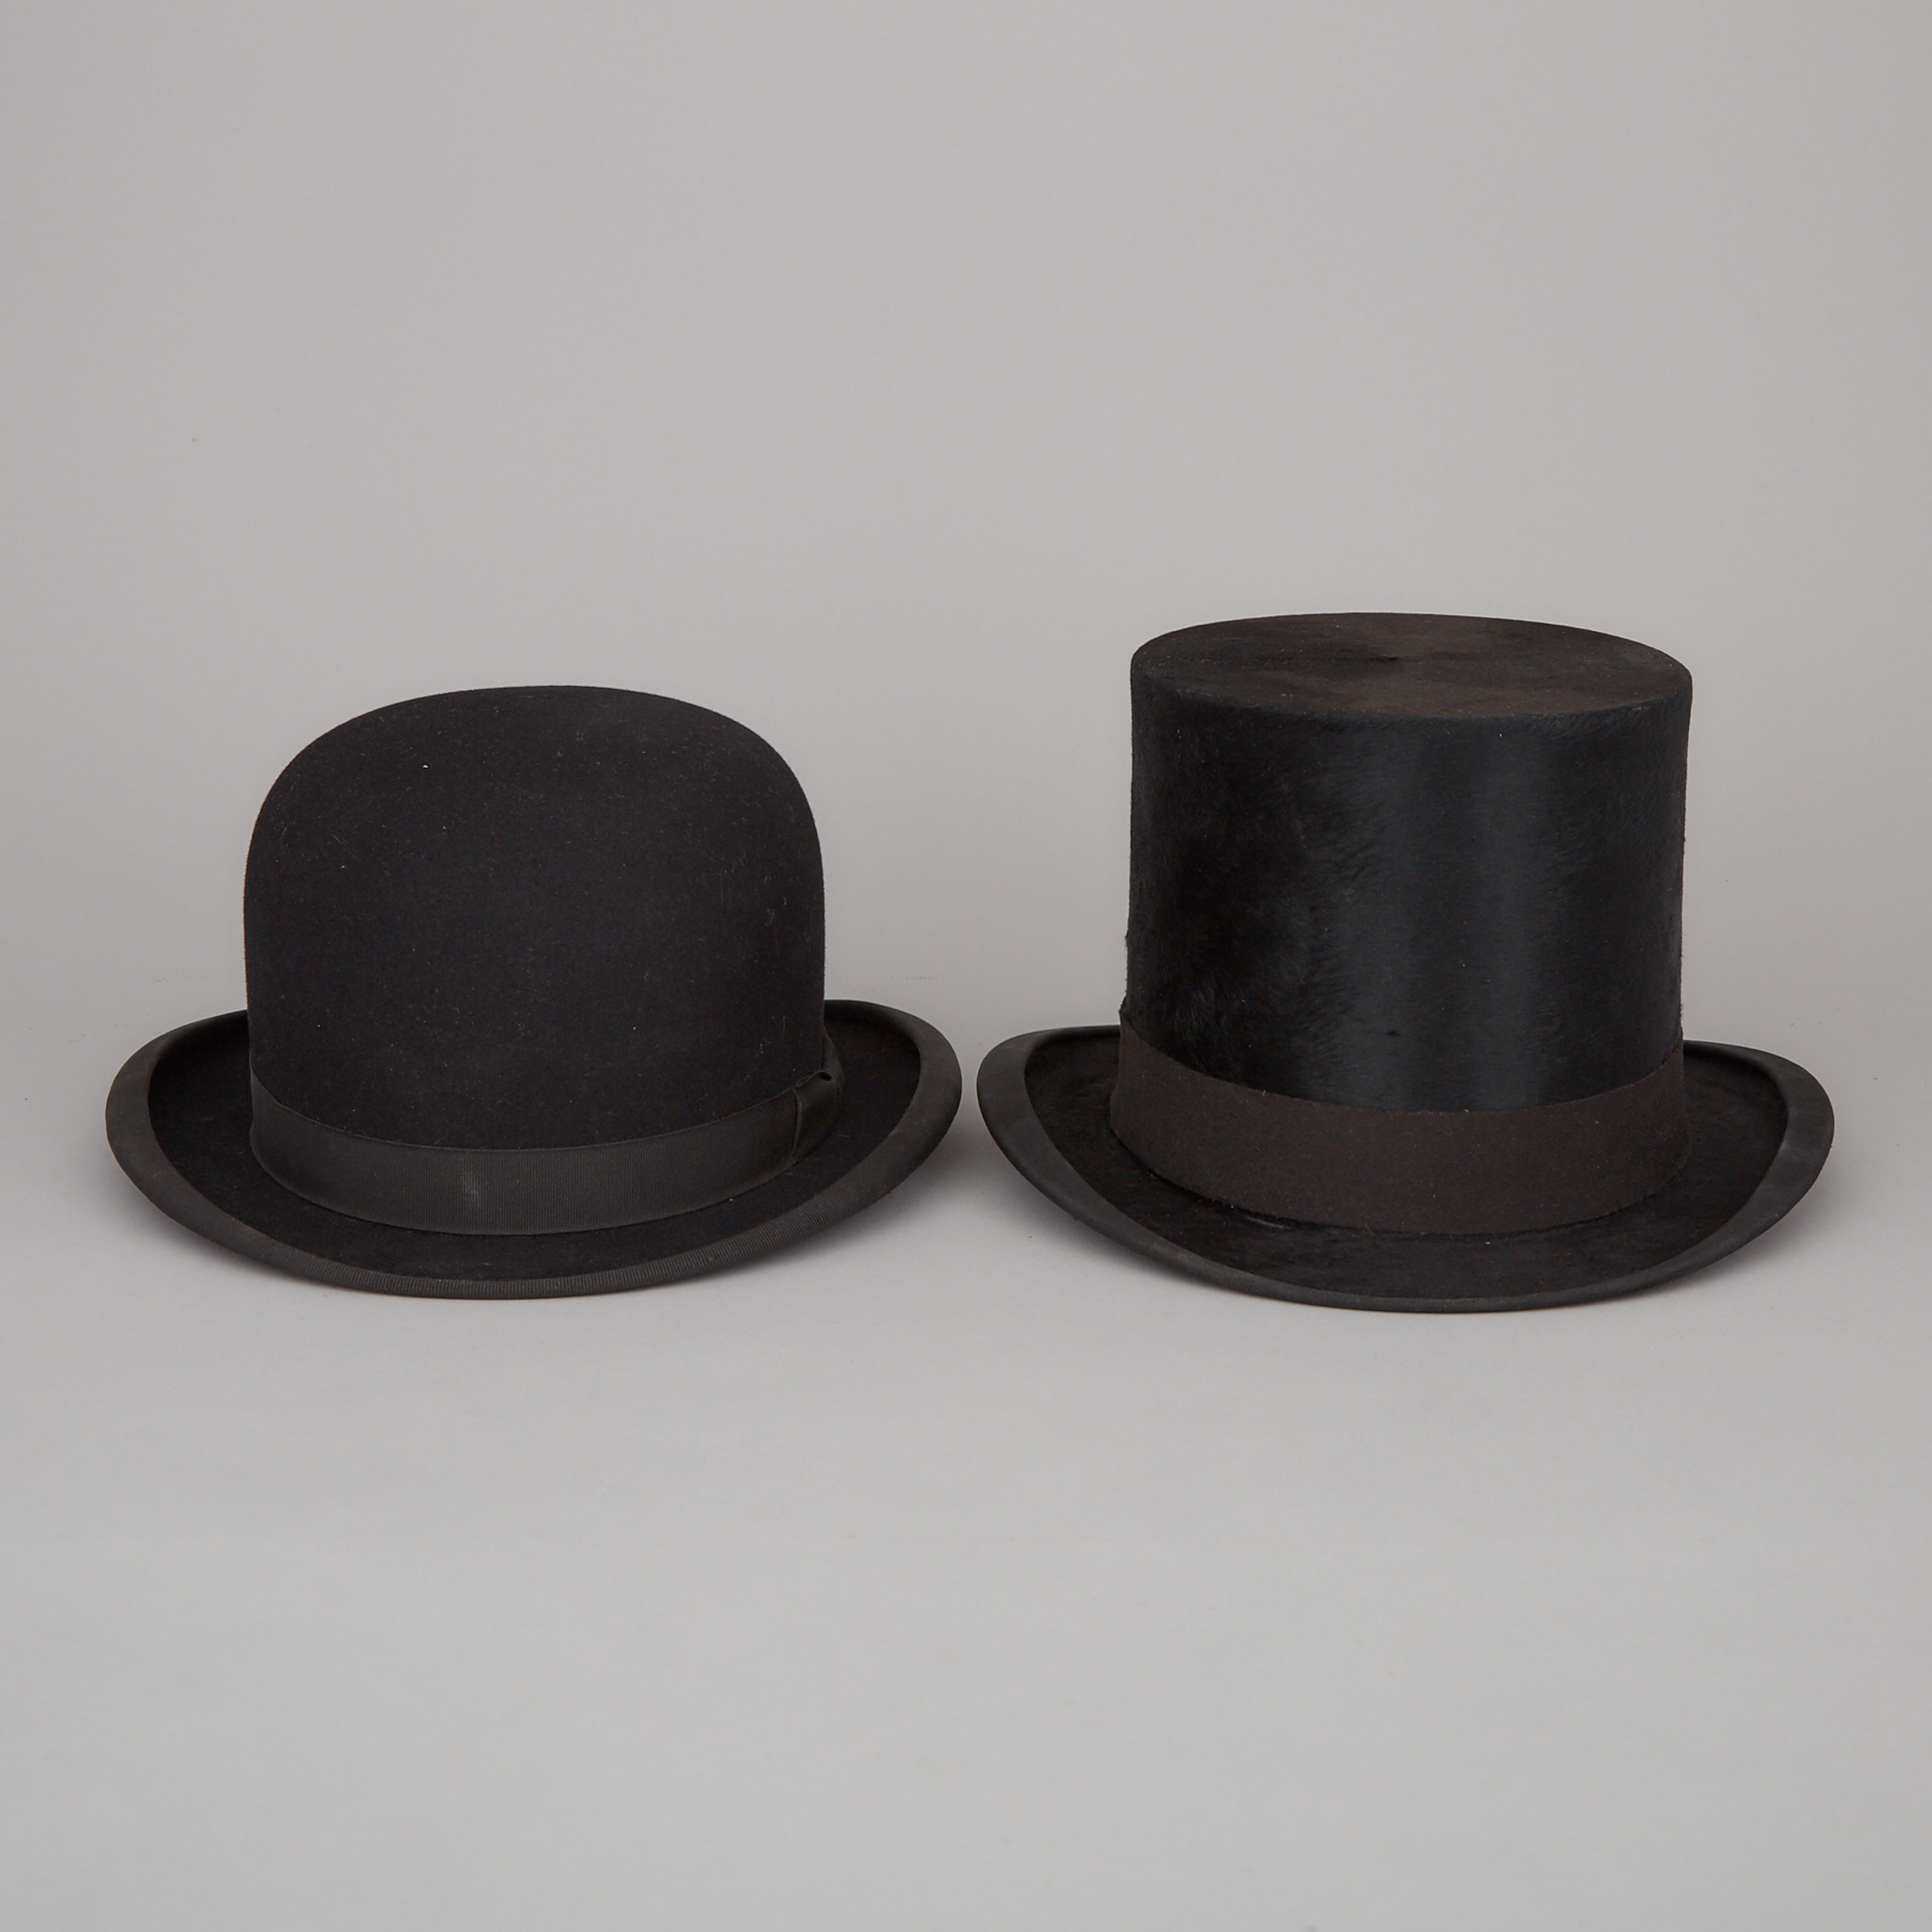 Two Gentlemen’s Hats, early-mid 20th century